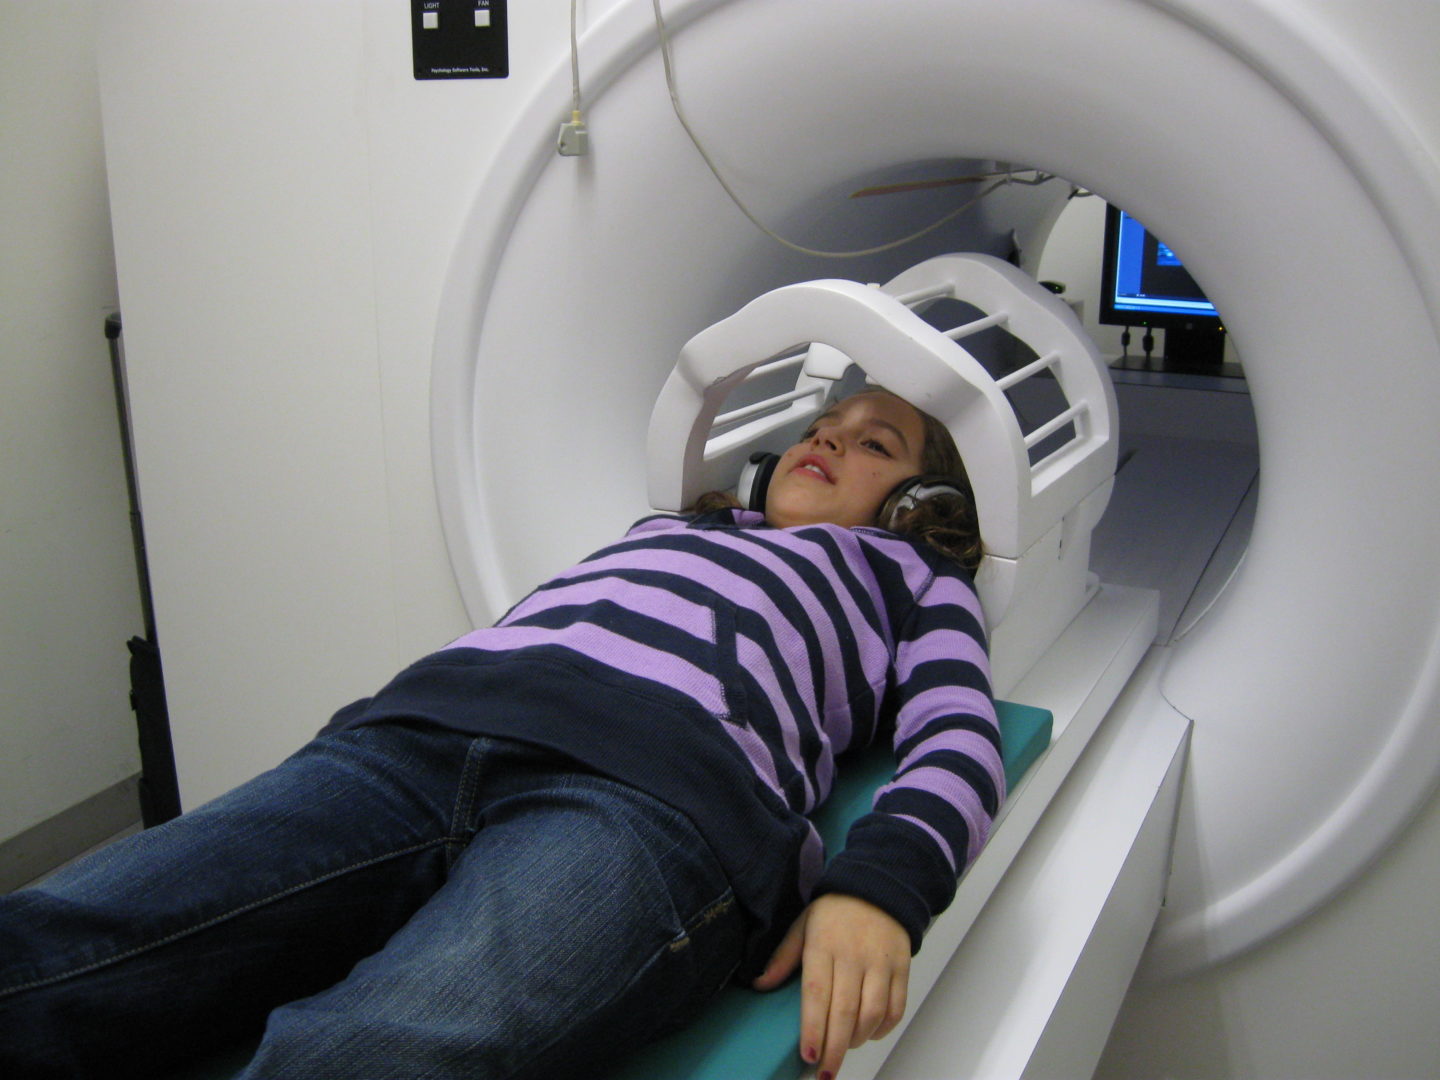 A young girl gets a brain scan inside an MRI machine